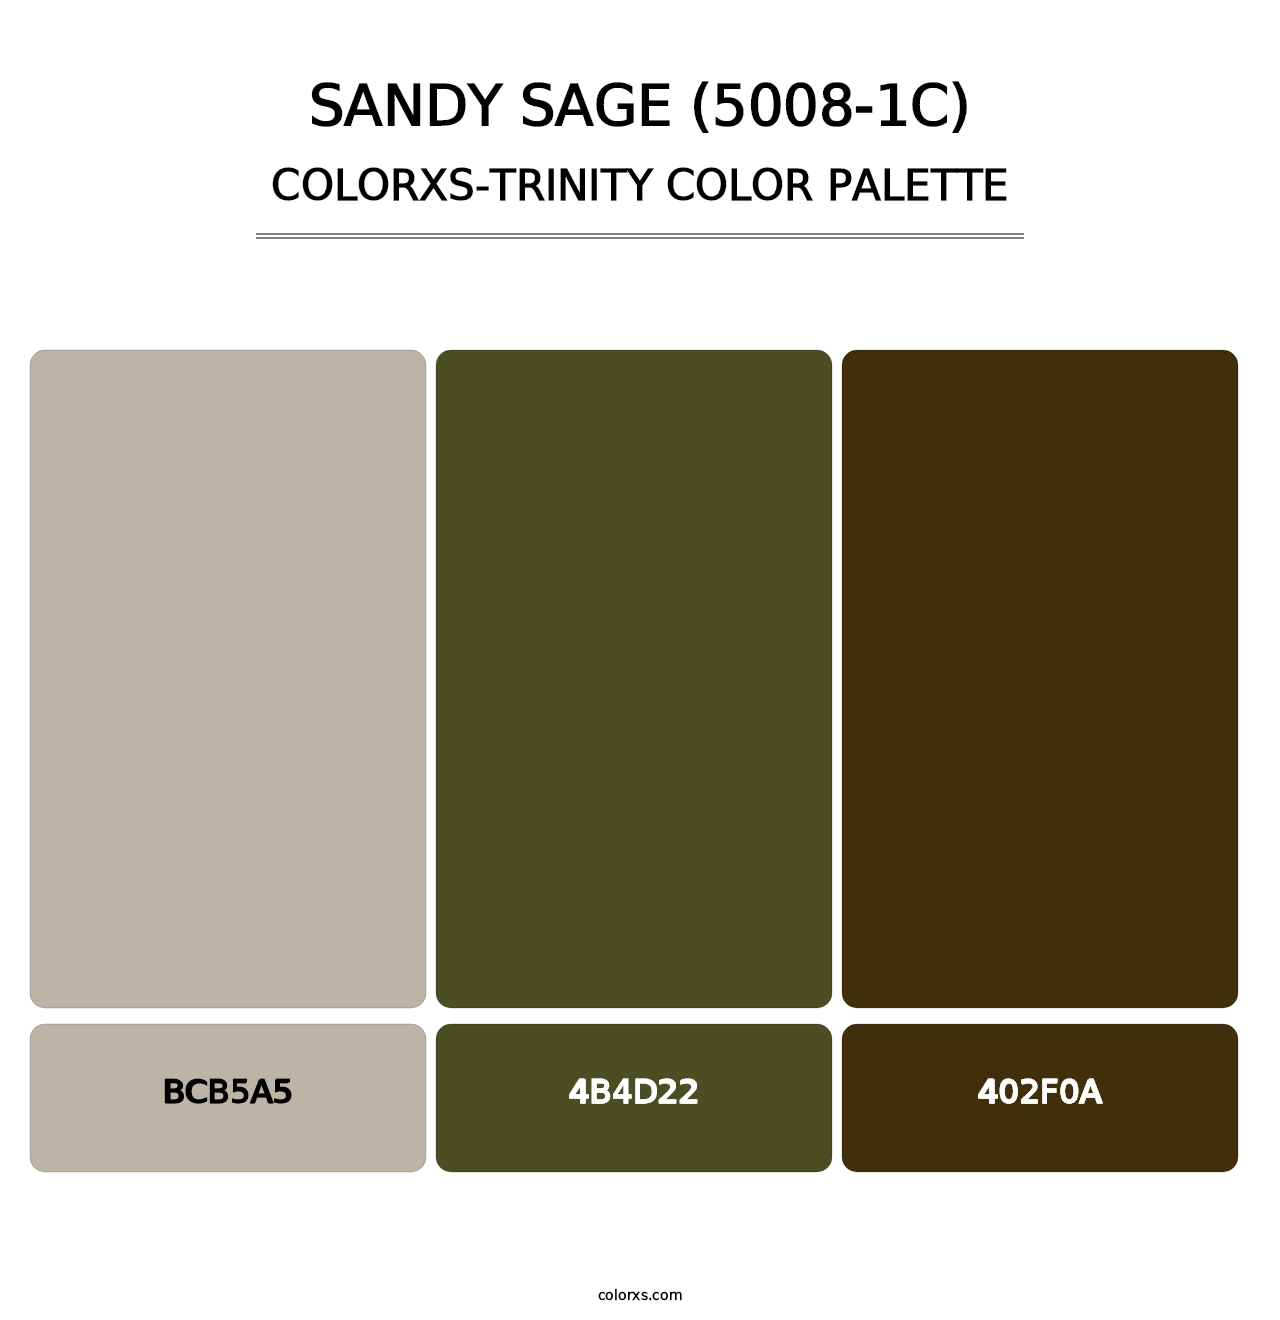 Sandy Sage (5008-1C) - Colorxs Trinity Palette